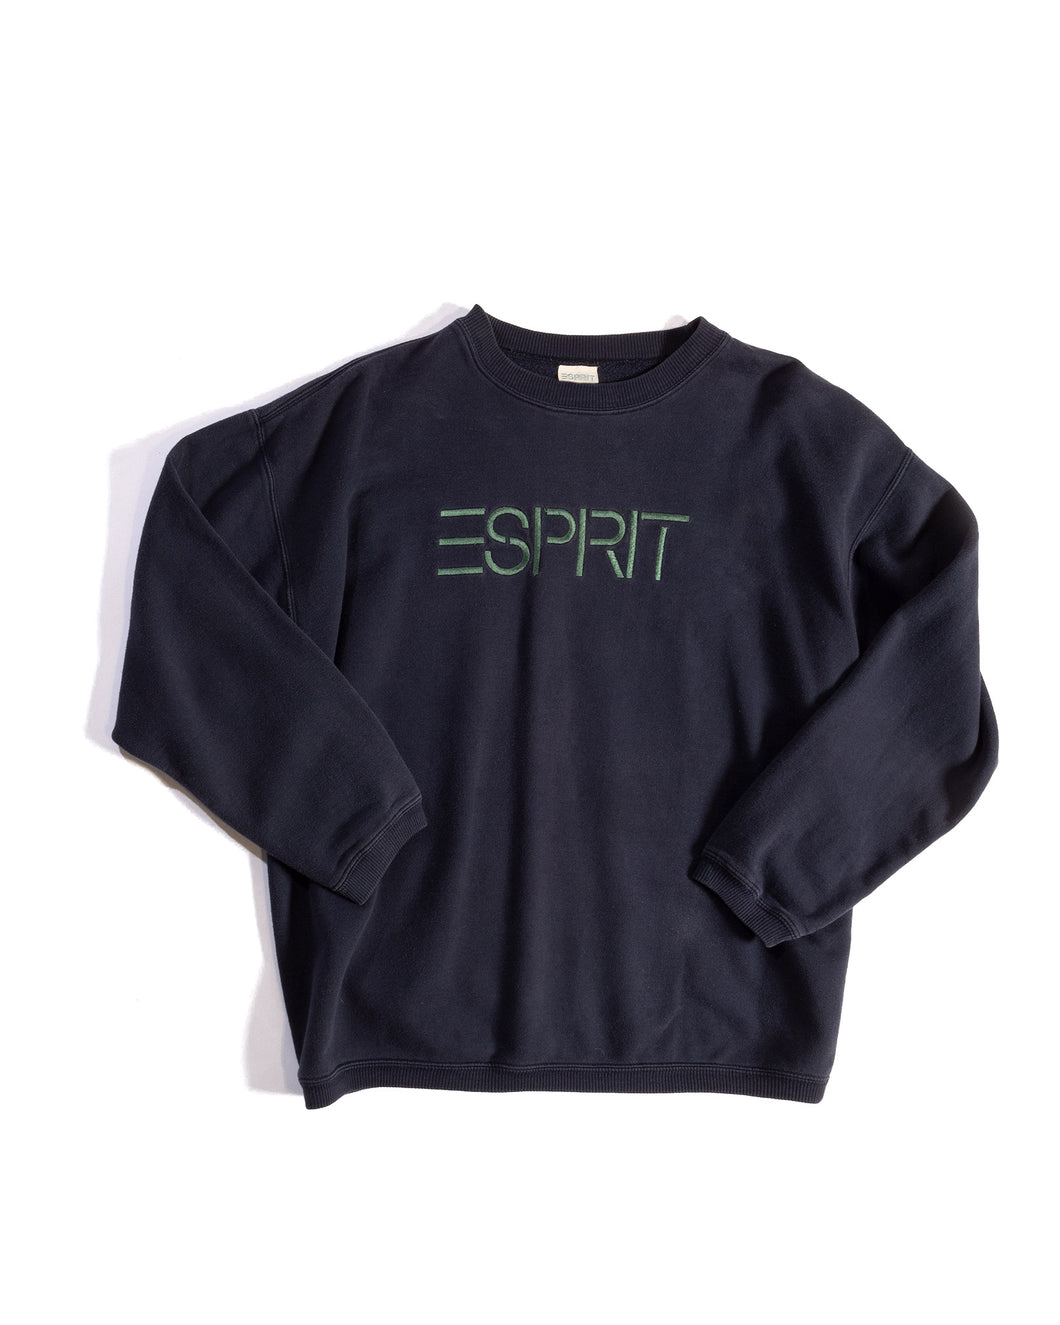 90s Esprit Navy Sweatshirt with Green Embroidered Logo